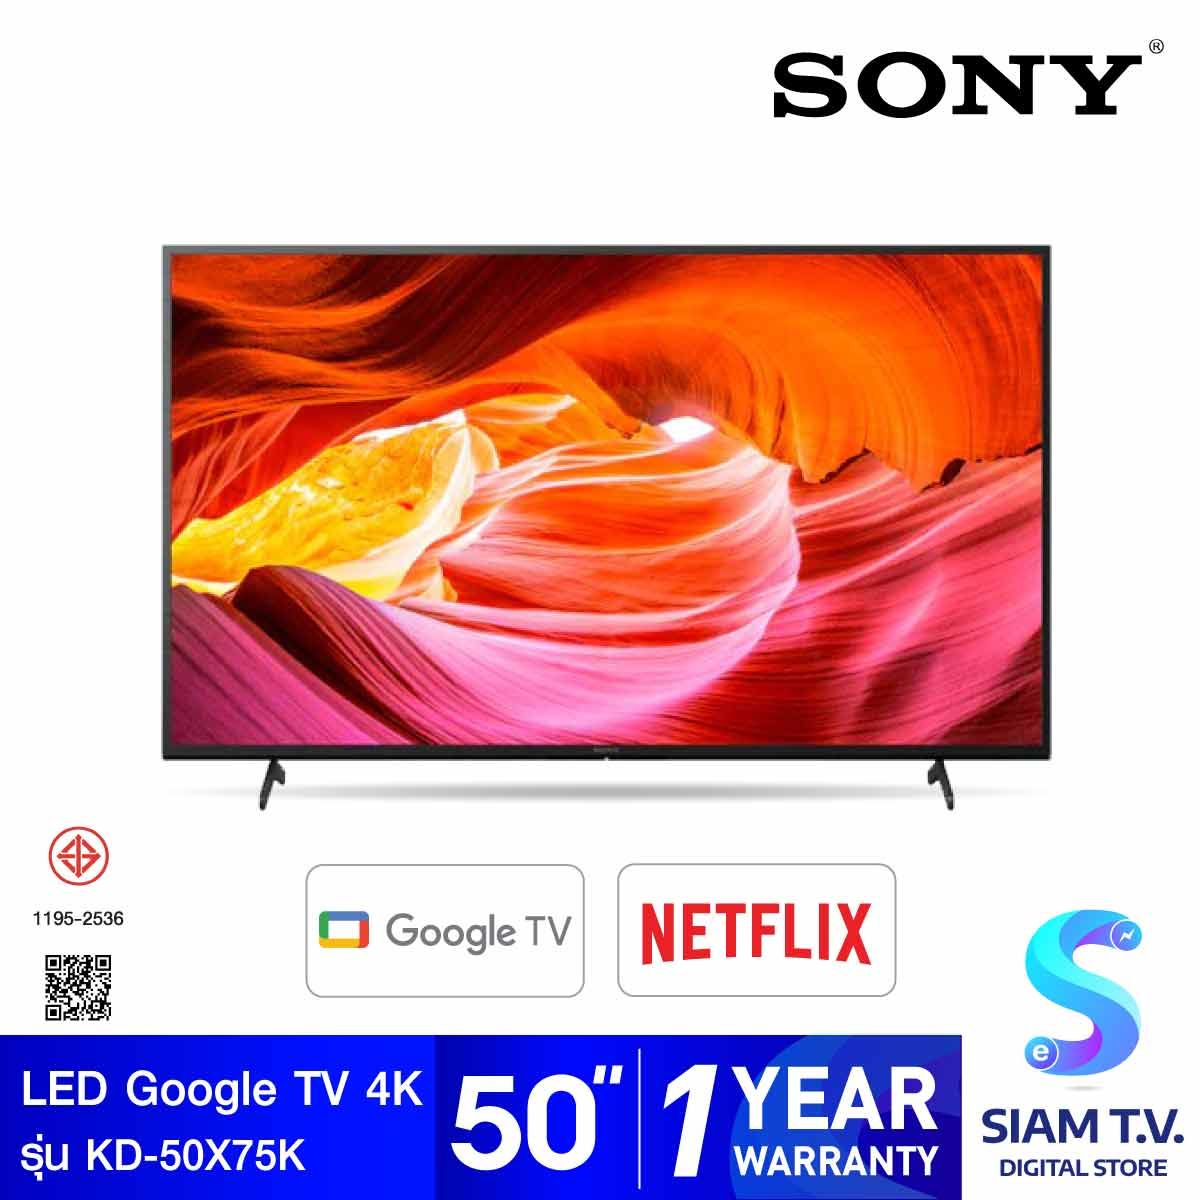 SONY BRAVIA LED GOOGLE TV 4K รุ่น KD-50X75K สมาร์ททีวี 50 นิ้ว